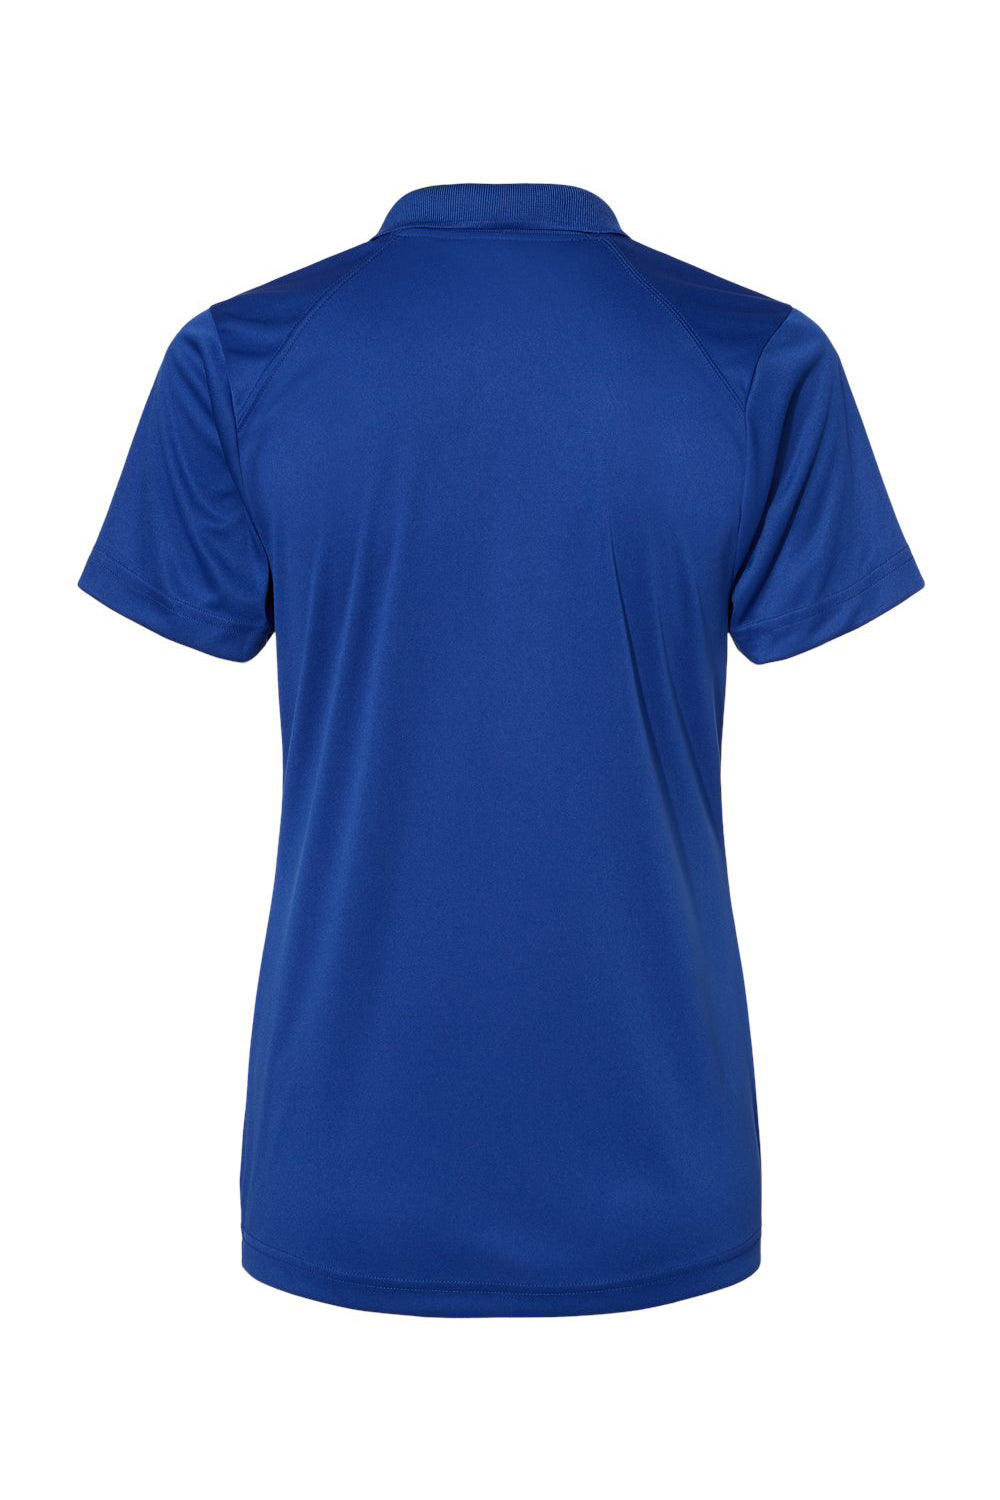 C2 Sport 5902 Womens Moisture Wicking Short Sleeve Polo Shirt Royal Blue Flat Back